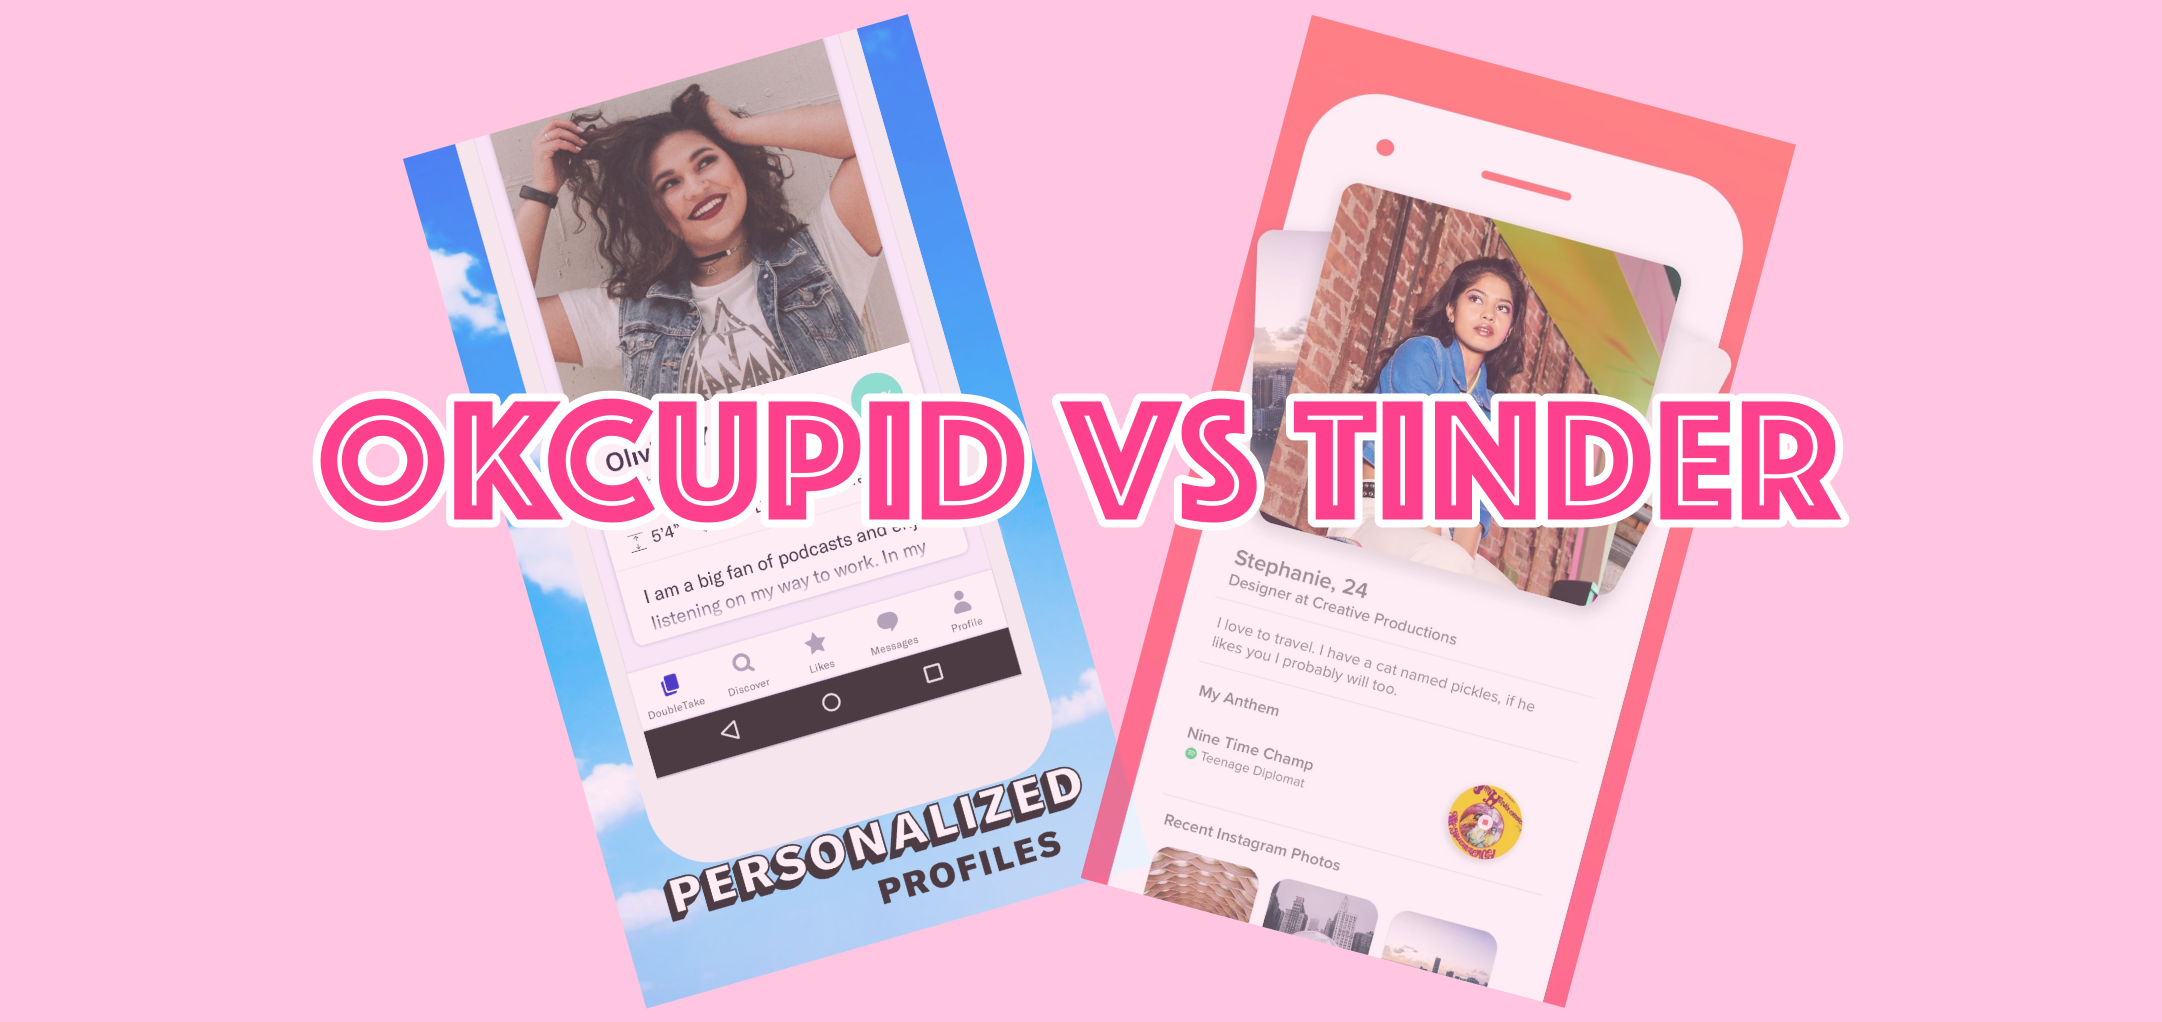 7 Ways to Improve Your OkCupid Profile